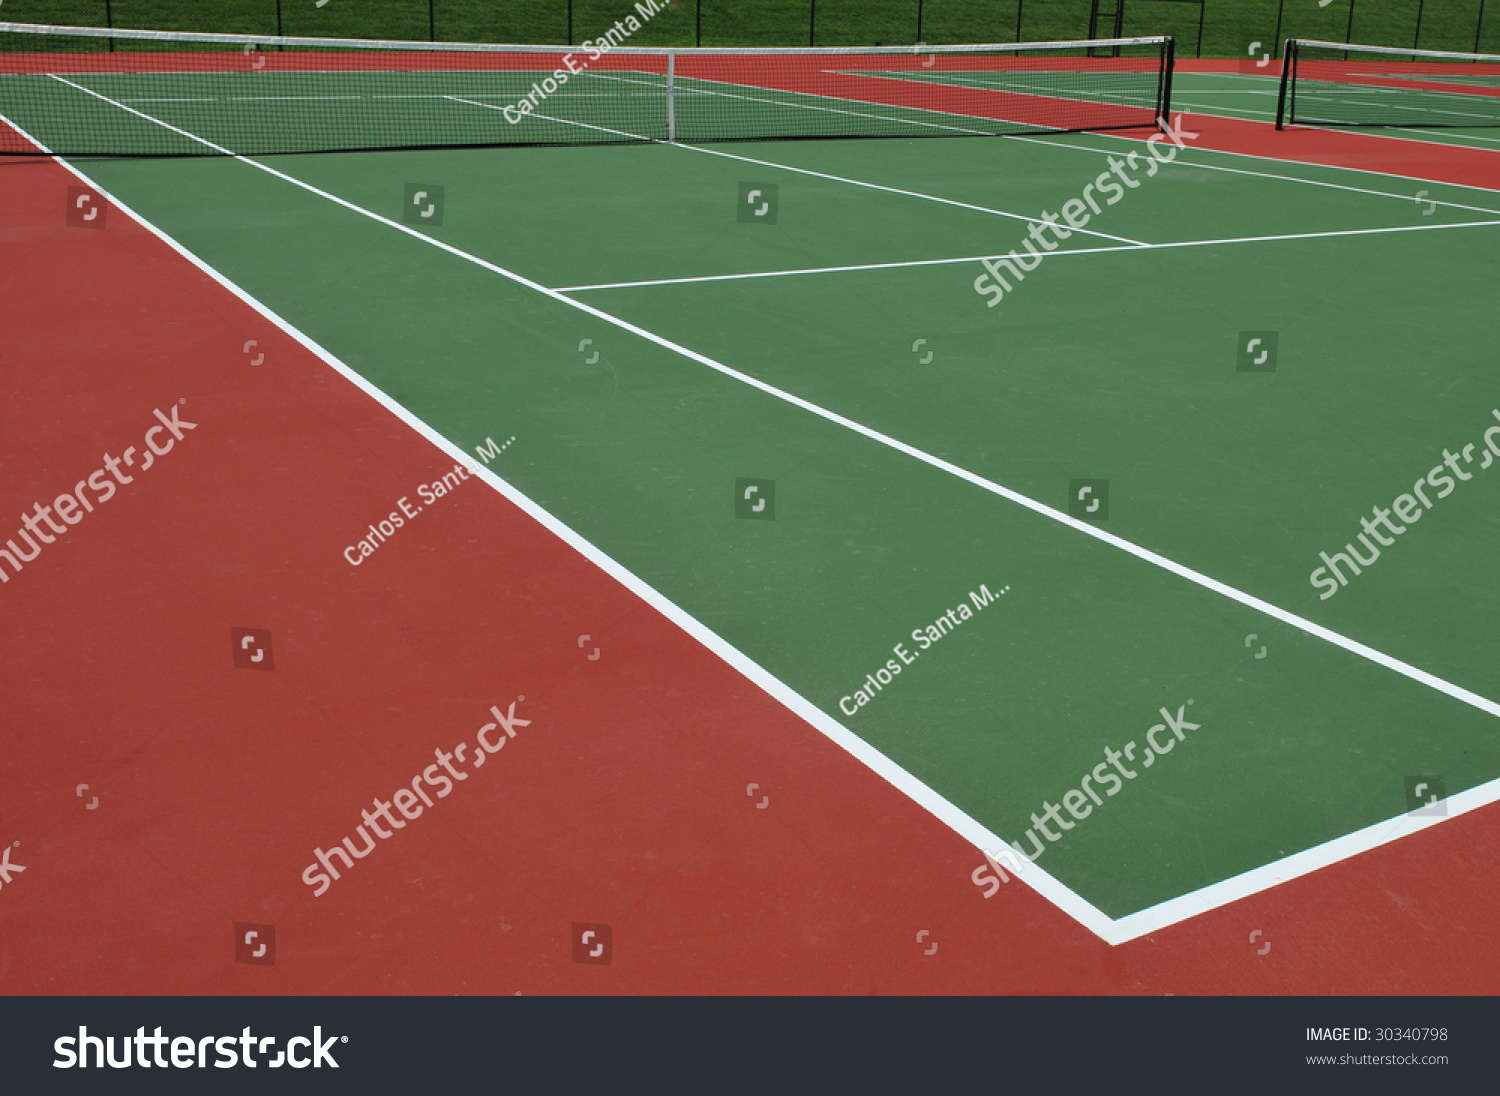 Sunny Day Tennis 114